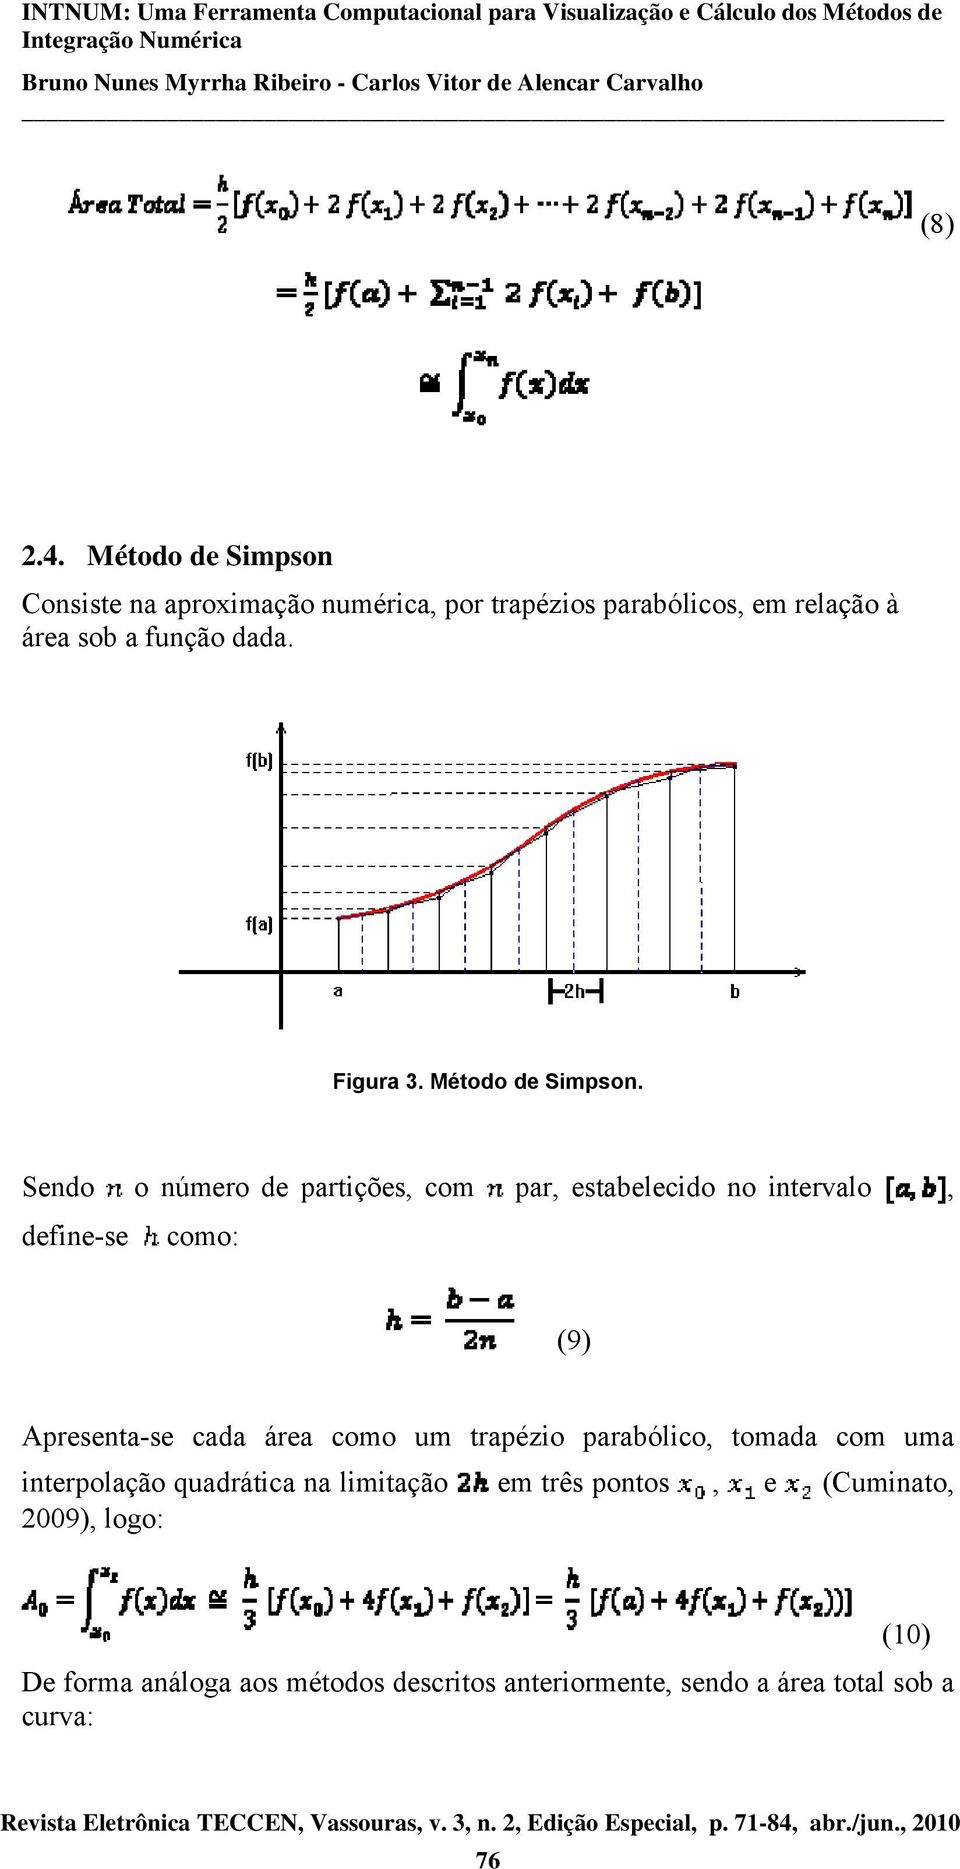 Figura 3. Método de Simpson.